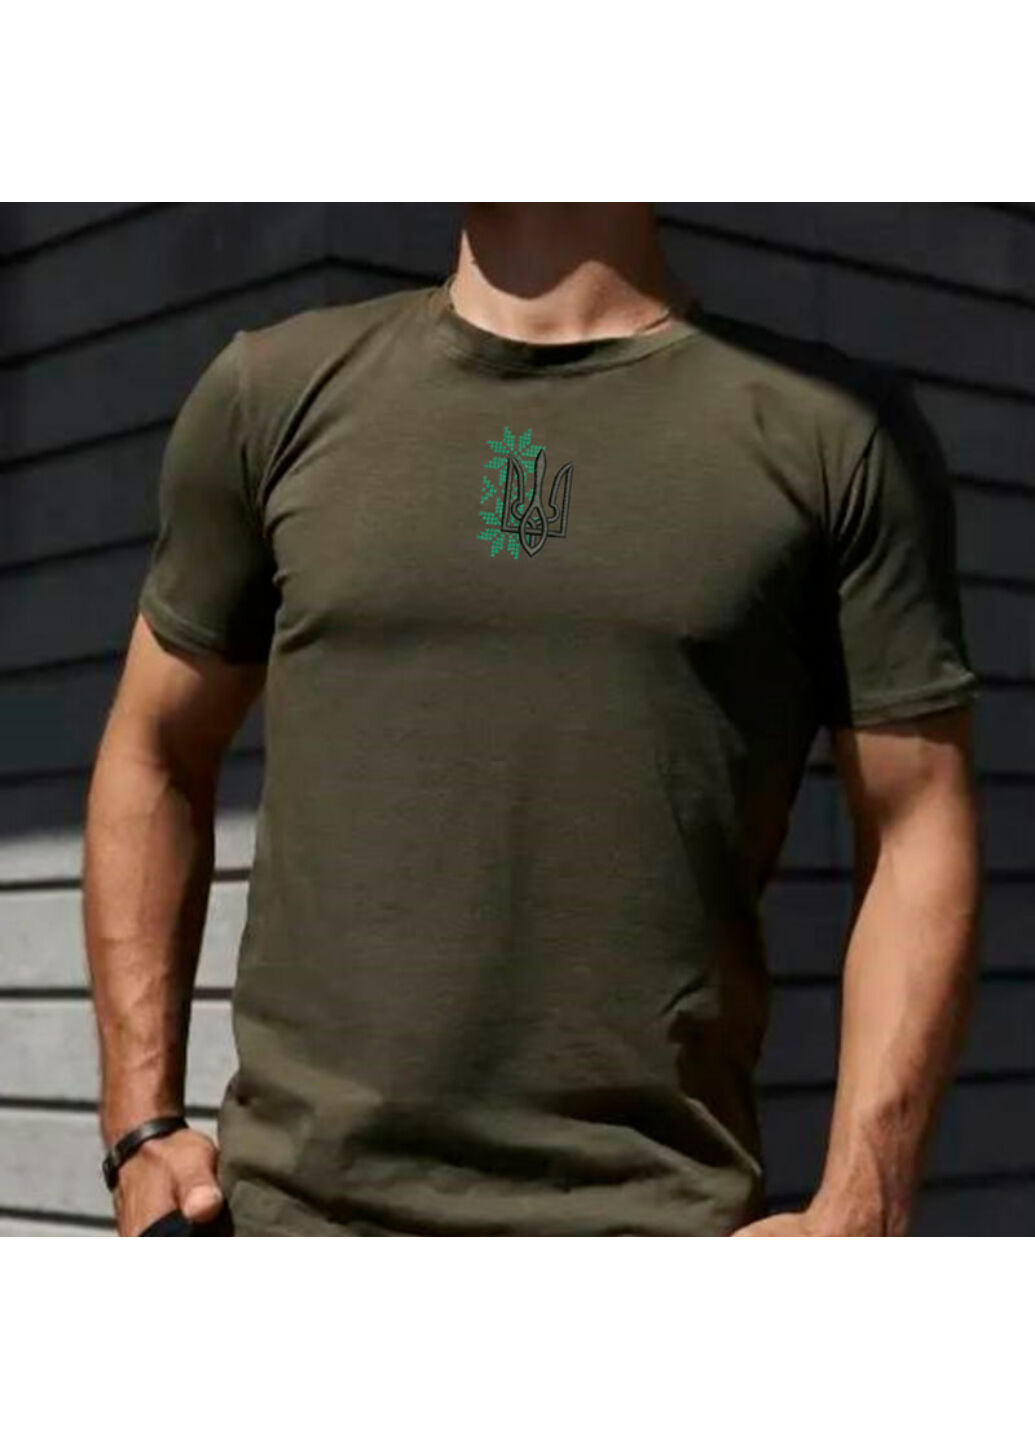 Хаки (оливковая) футболка з вишивкою тризуба 01-2 мужская хаки xl No Brand